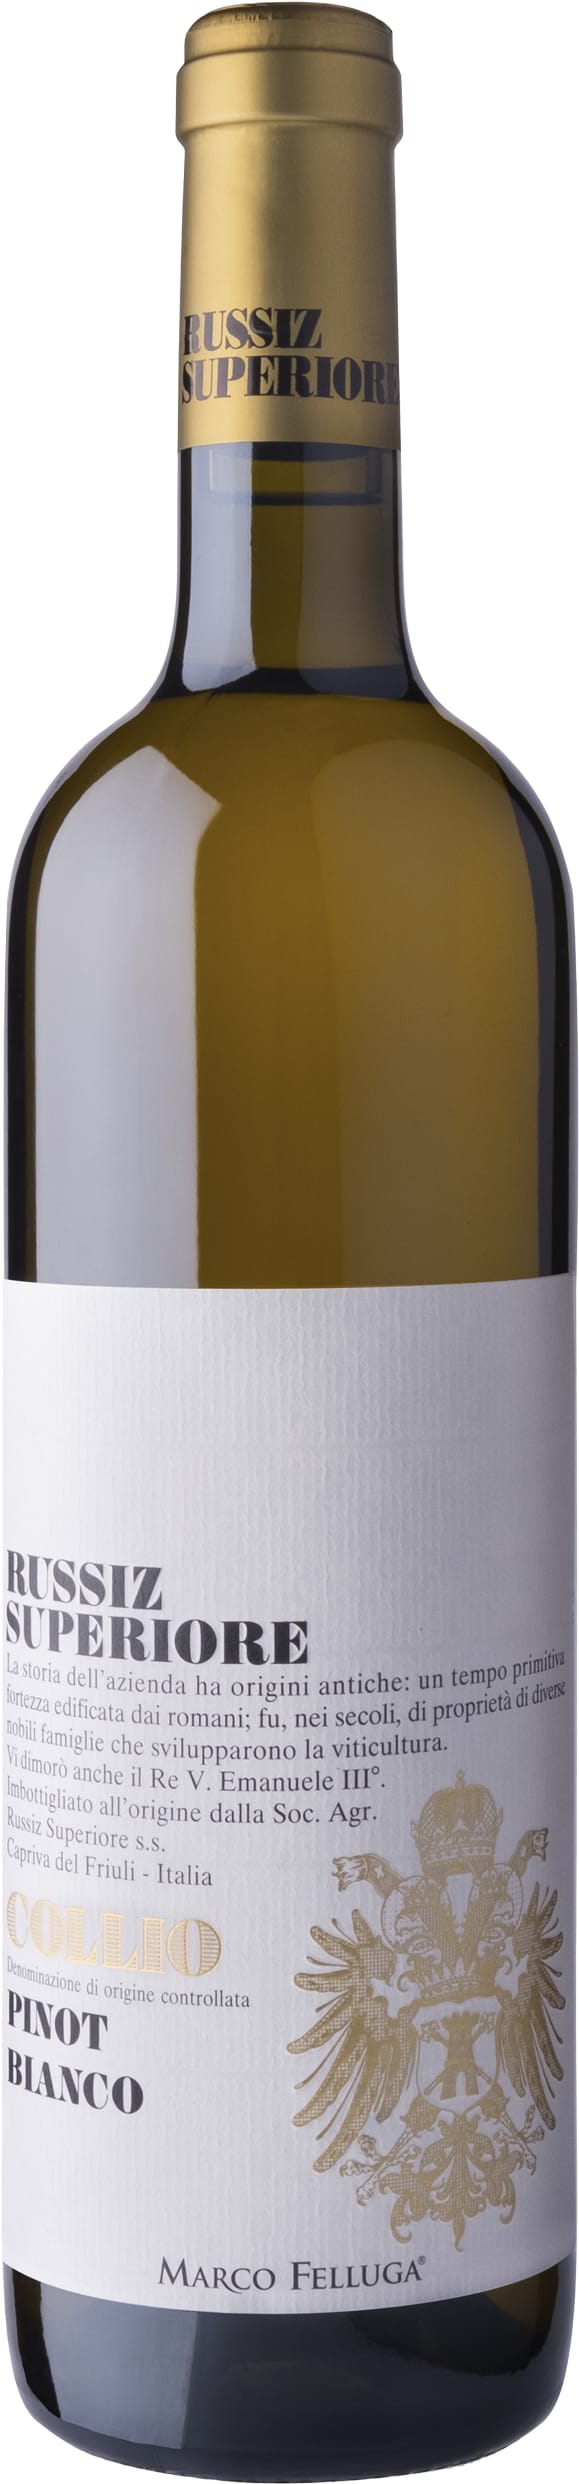 Russiz Superiore Pinot Bianco, Collio 2021 6x75cl - Just Wines 